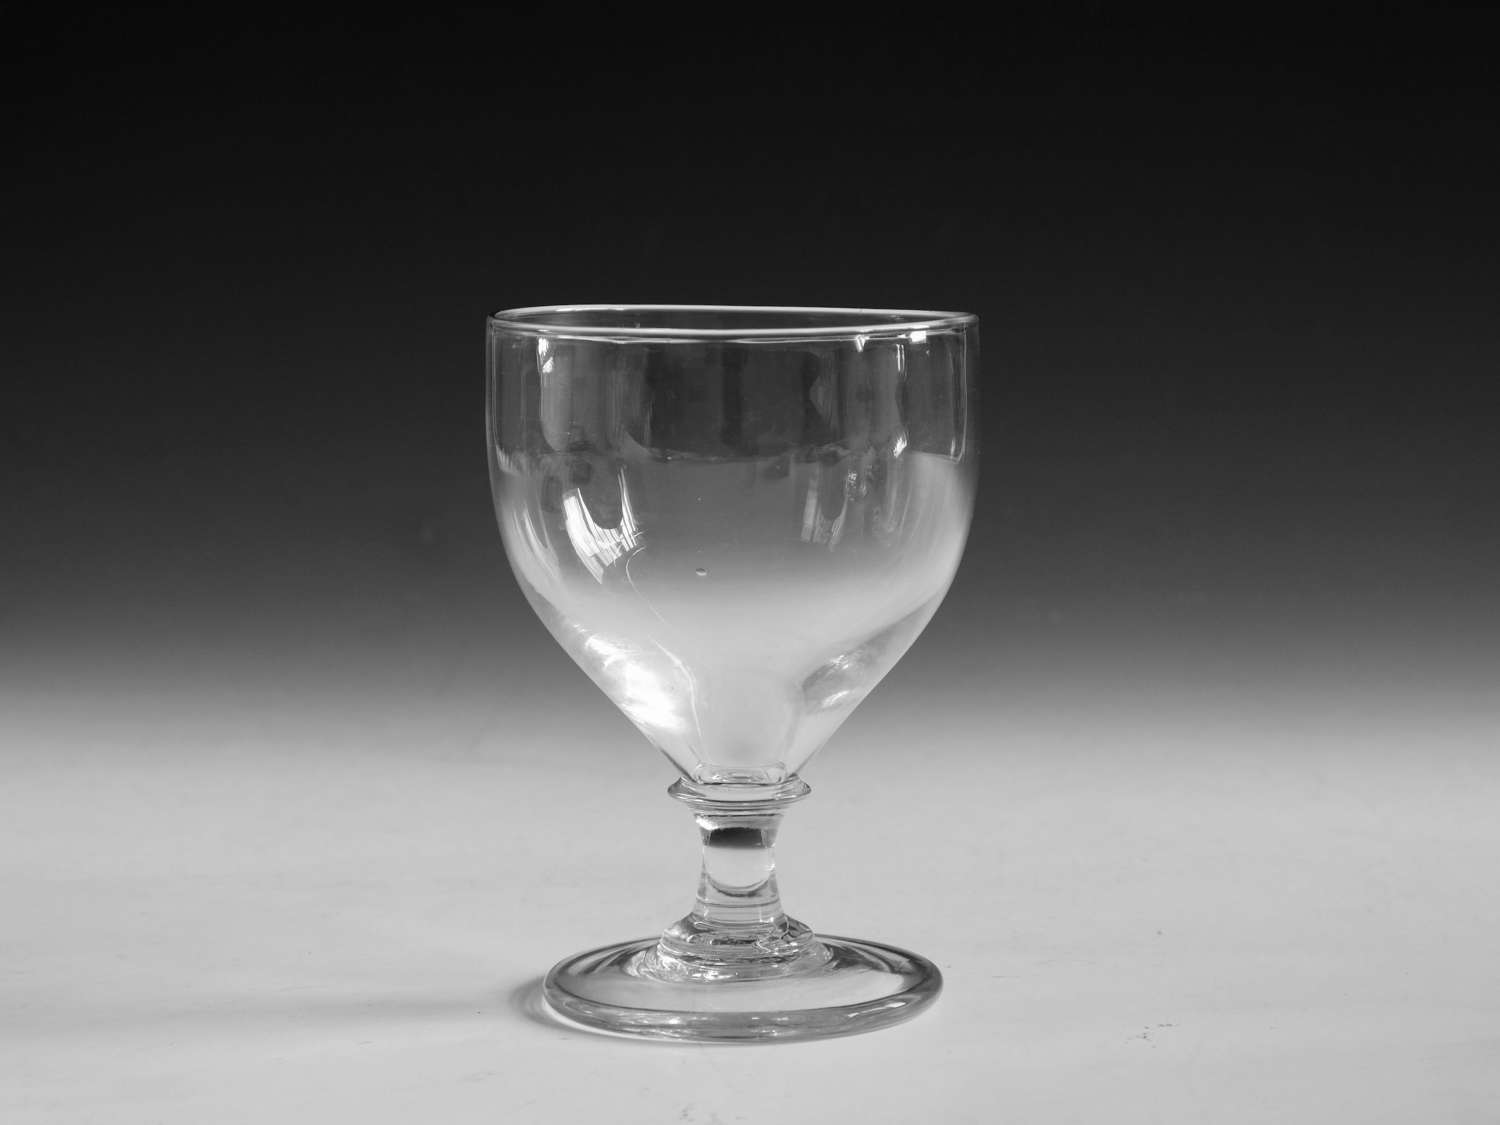 Antique glass rummer ovoid English c1800